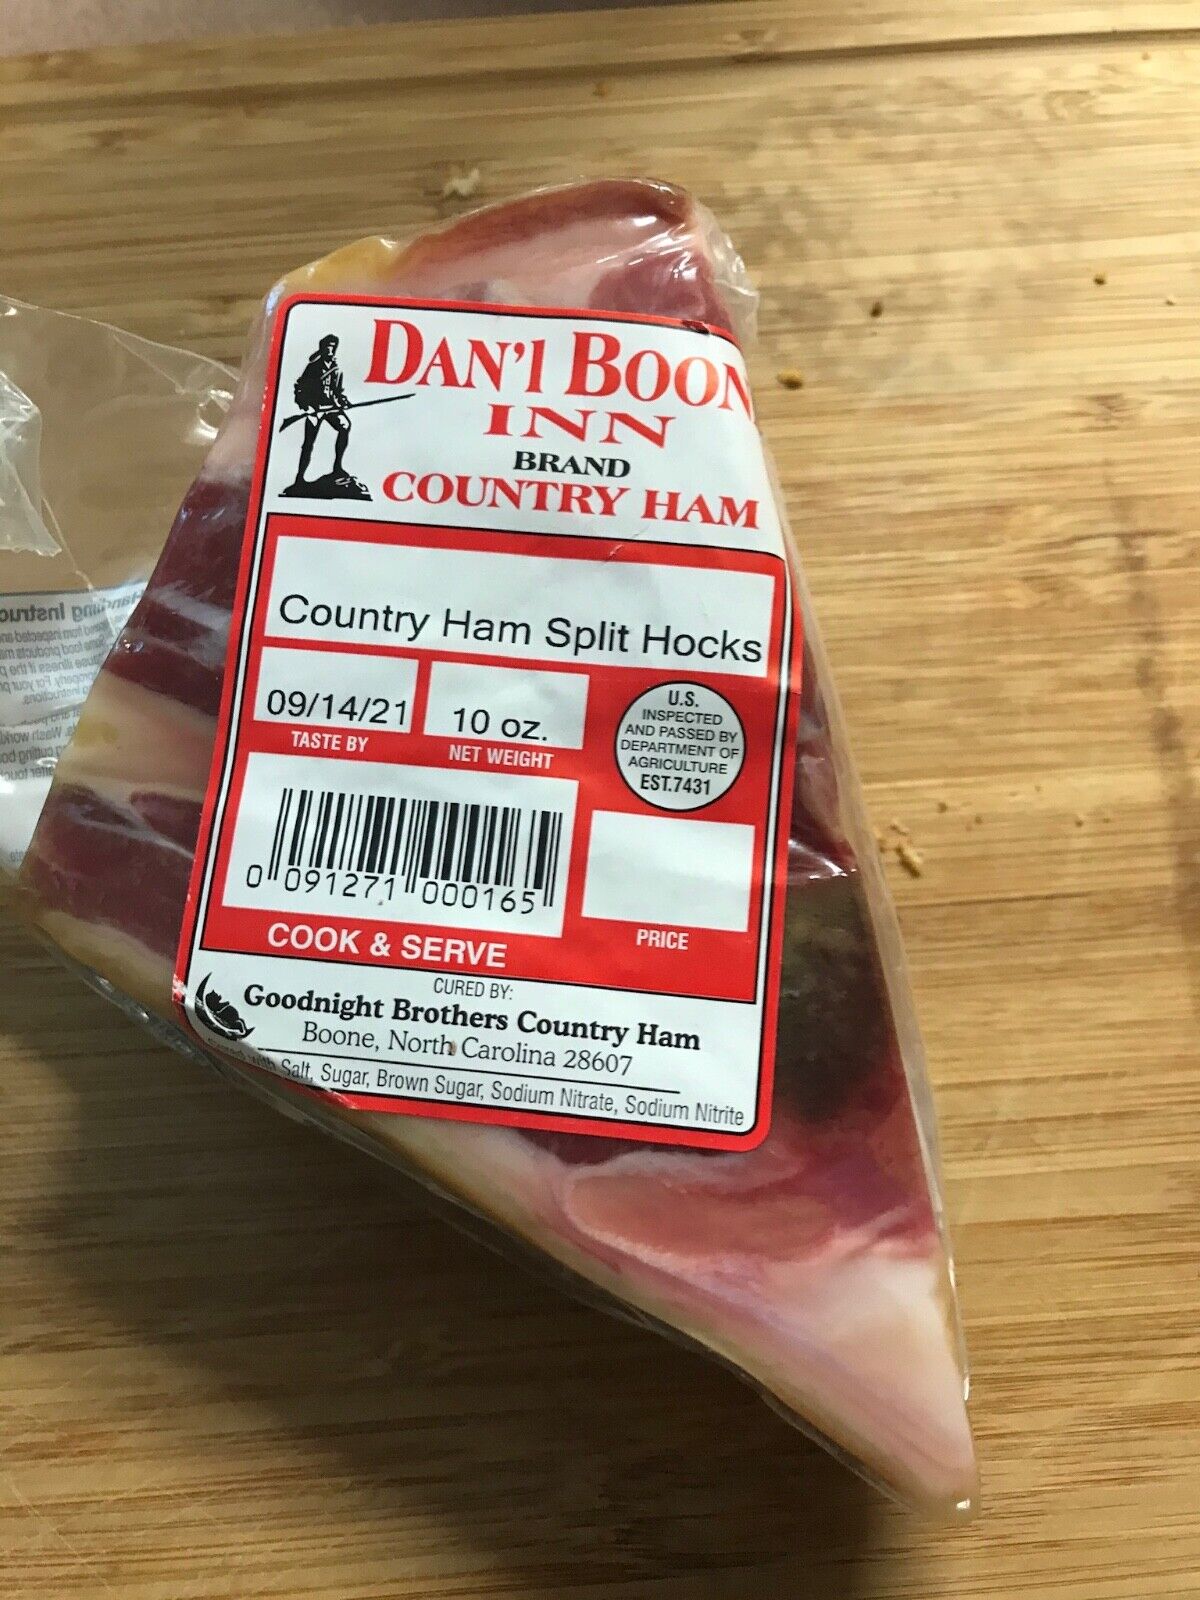 Dan'l Boone Inn Mountain Cured Country Ham Hock 3 packs, Soul Food, Country Food Dan'l Boone Inn